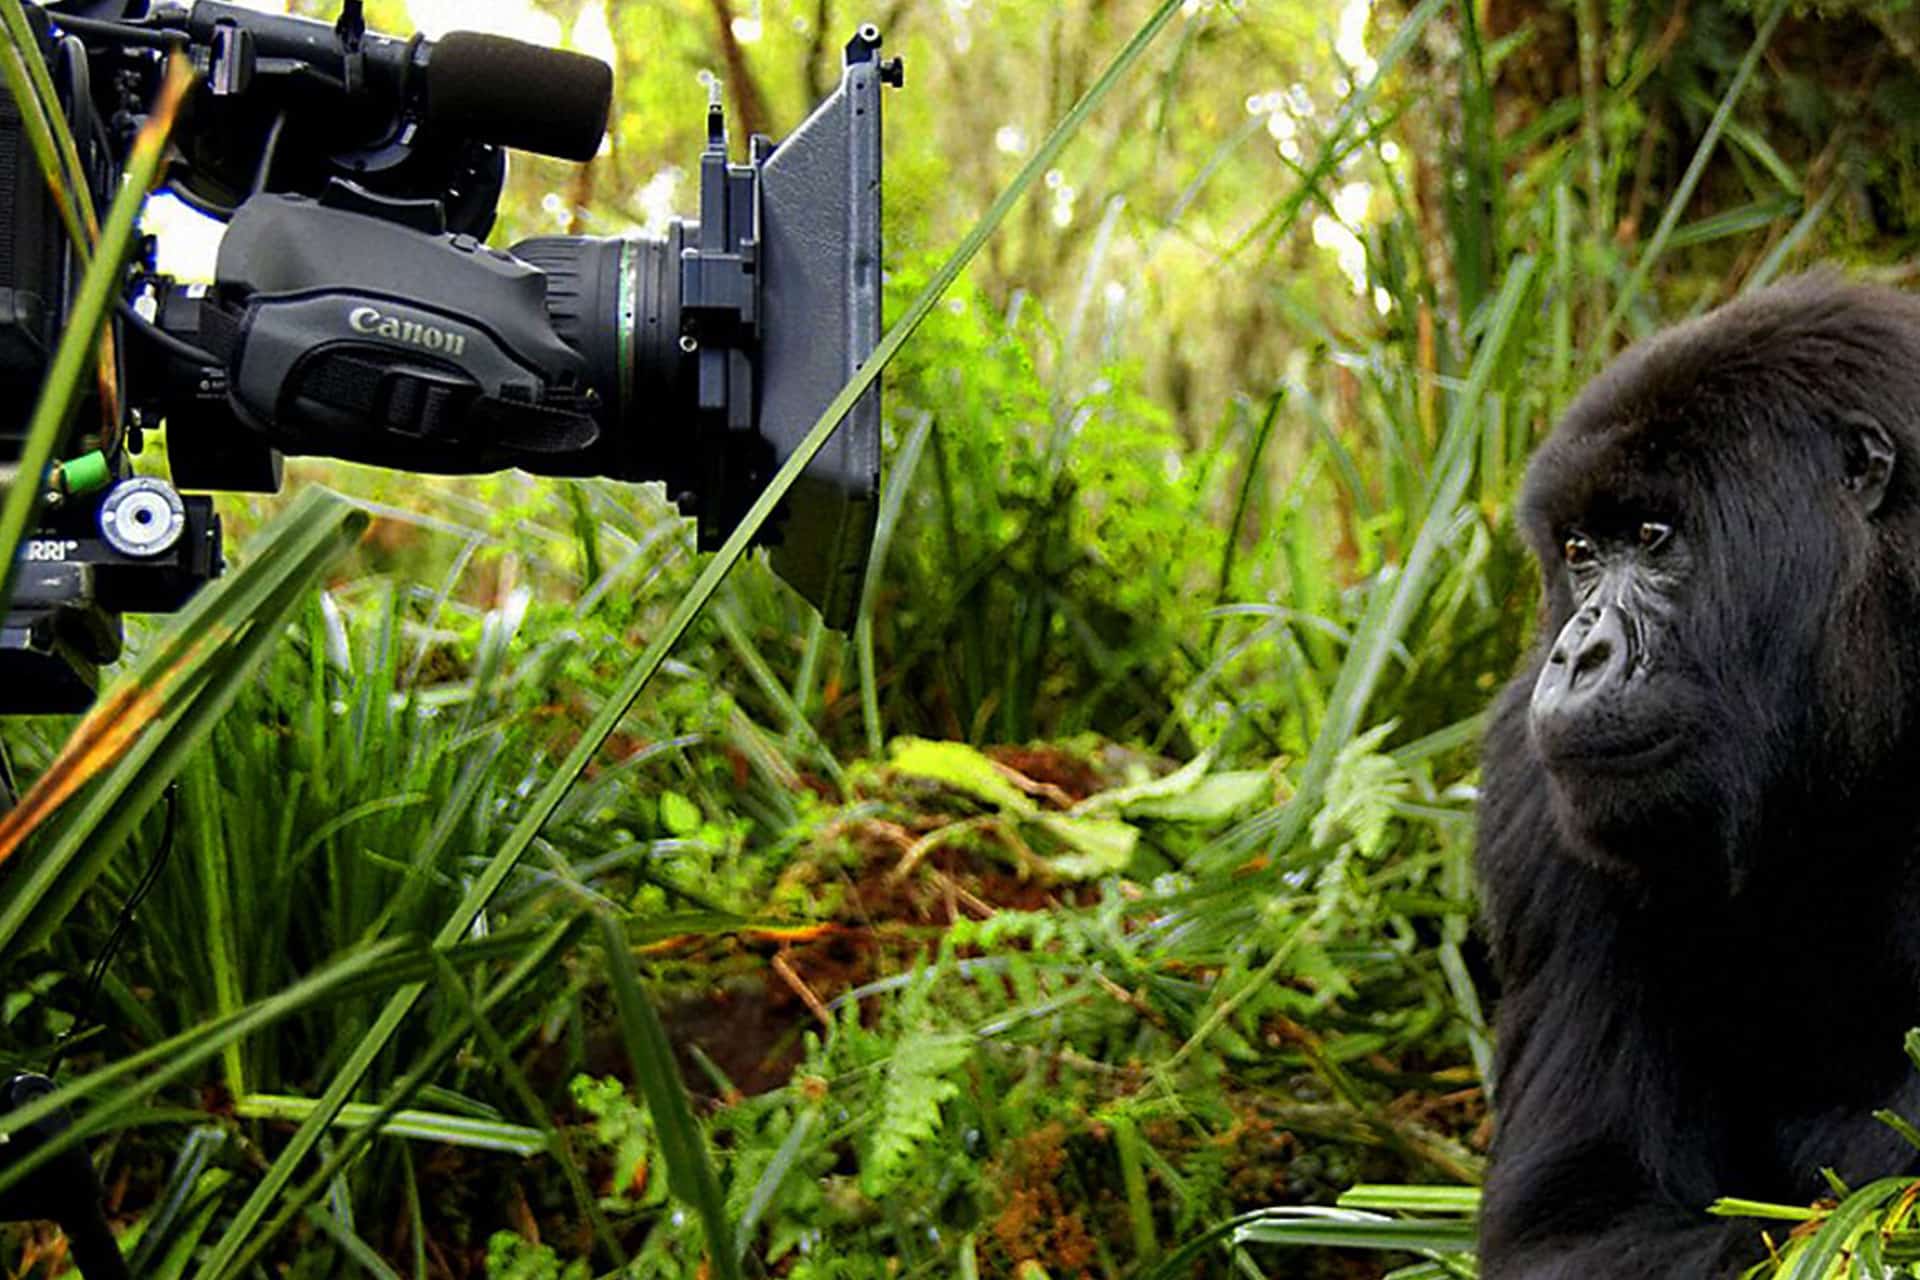 A gorilla from the Titus gorilla family in Rwanda looking into a camera in the jungle